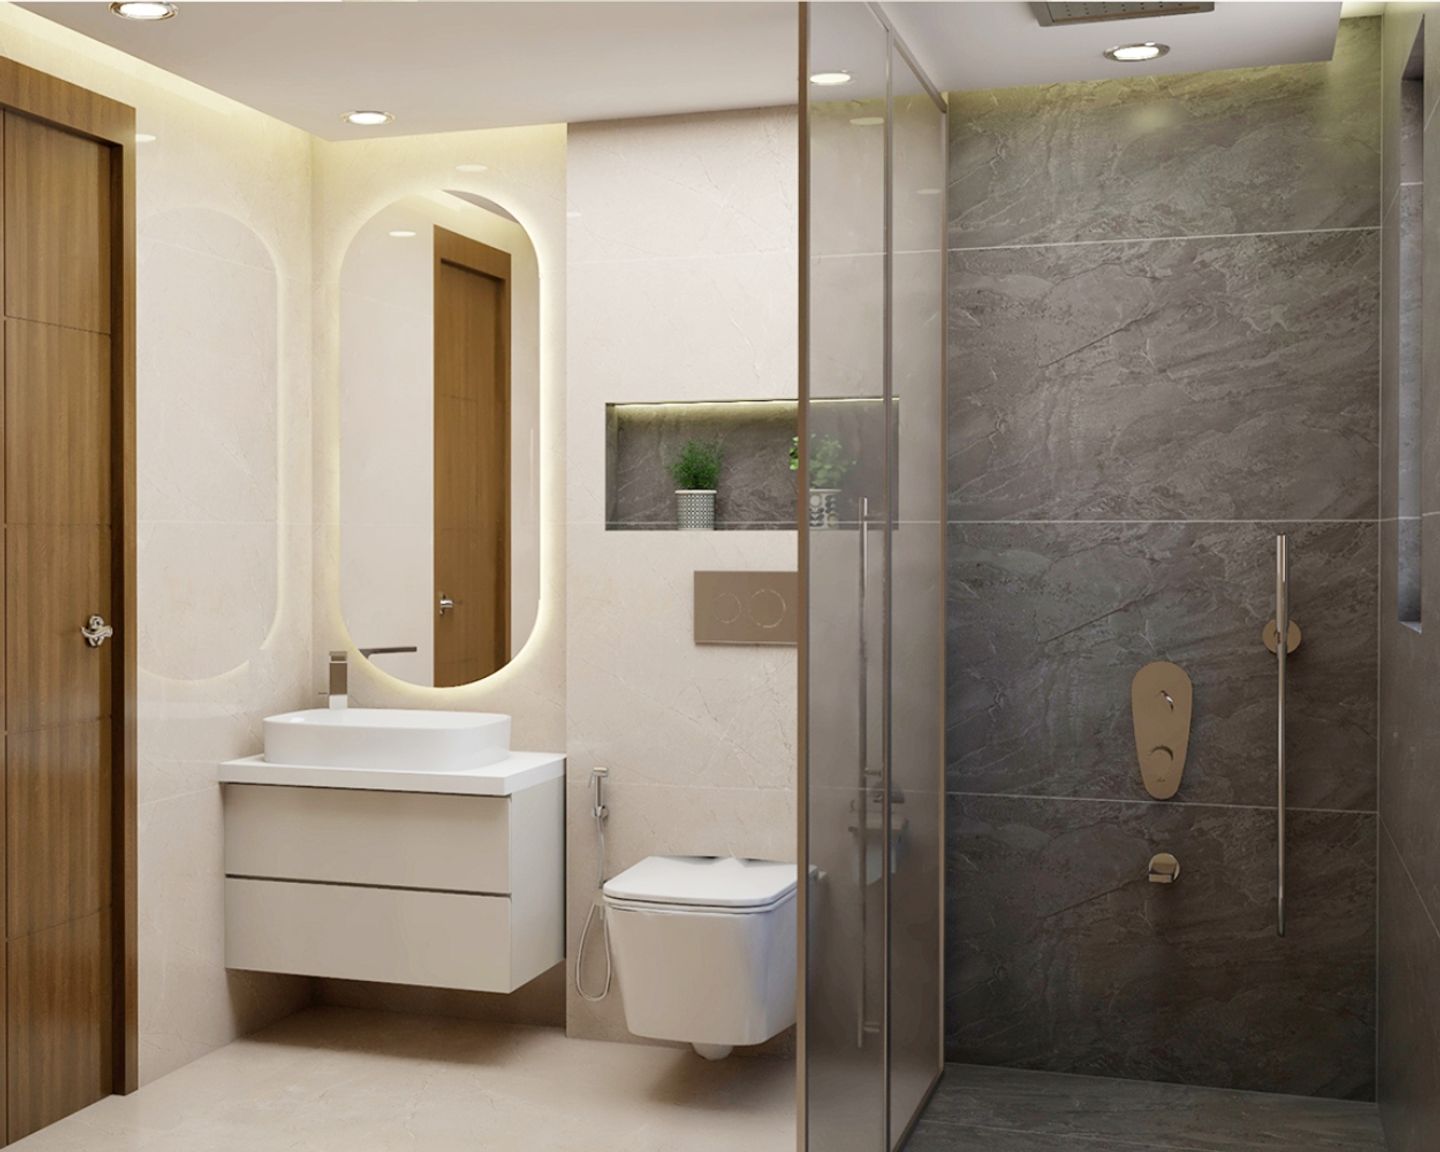 8X5 Ft Grey And Beige Bathroom Design WIth Vanity Unit - Livspace